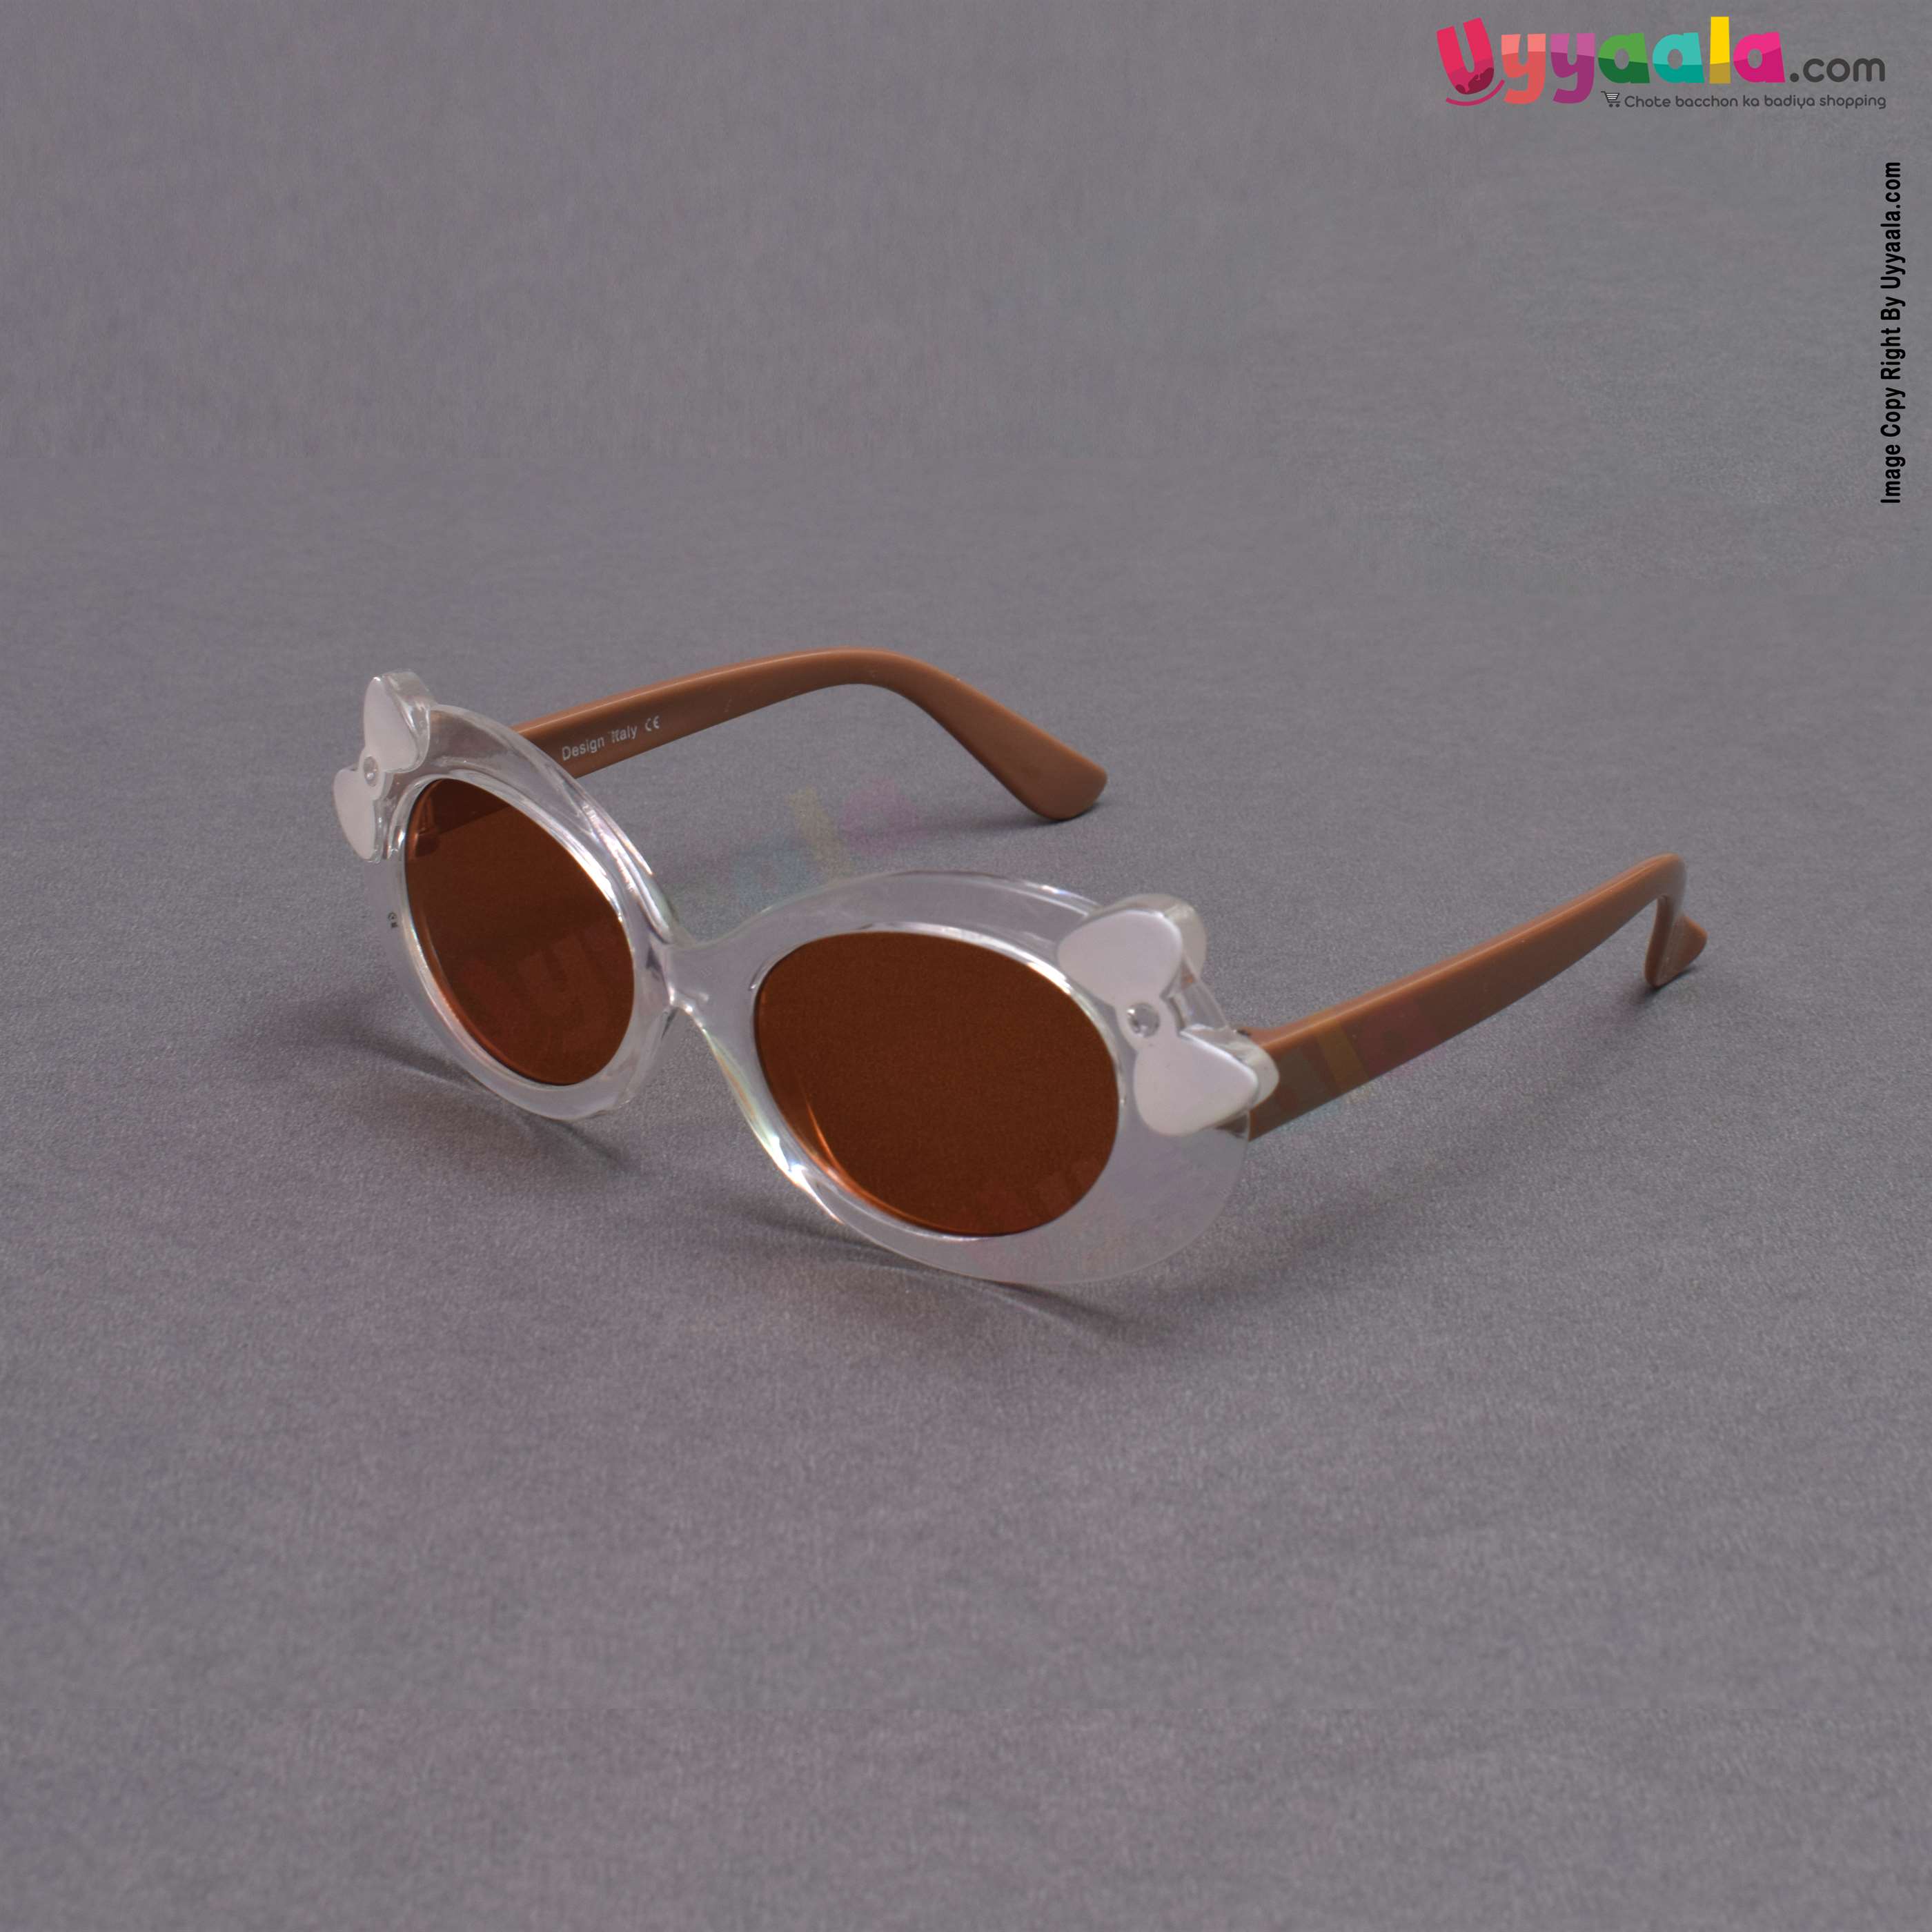 Stylish cat-eye transparent sunglasses for kids - brown